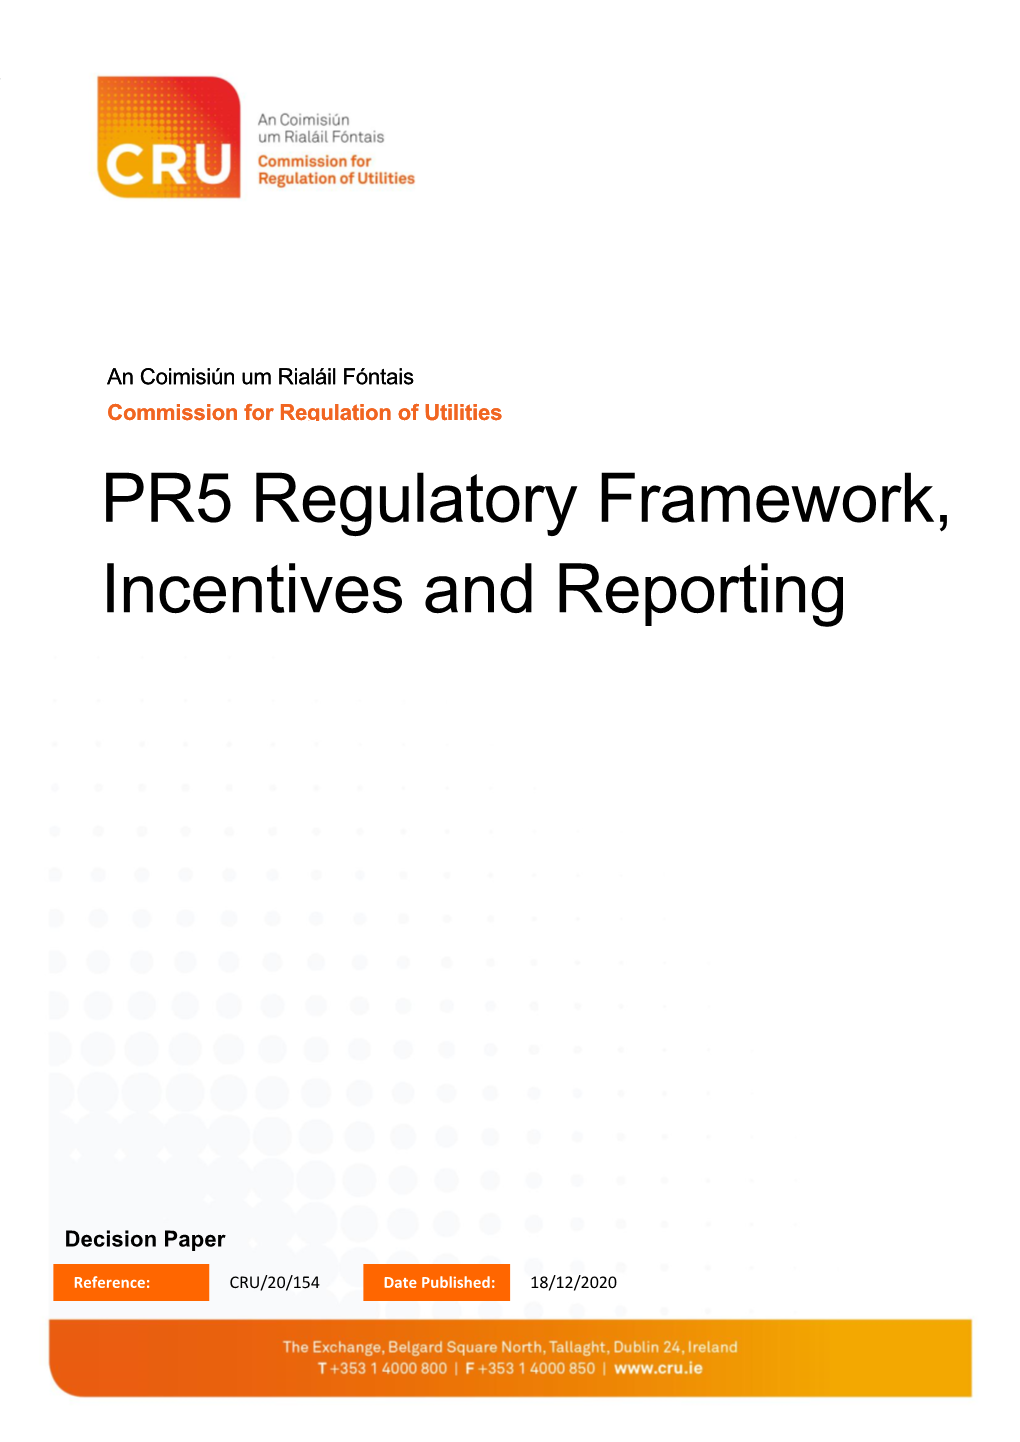 PR5 Regulatory Framework, Incentives and Reporting